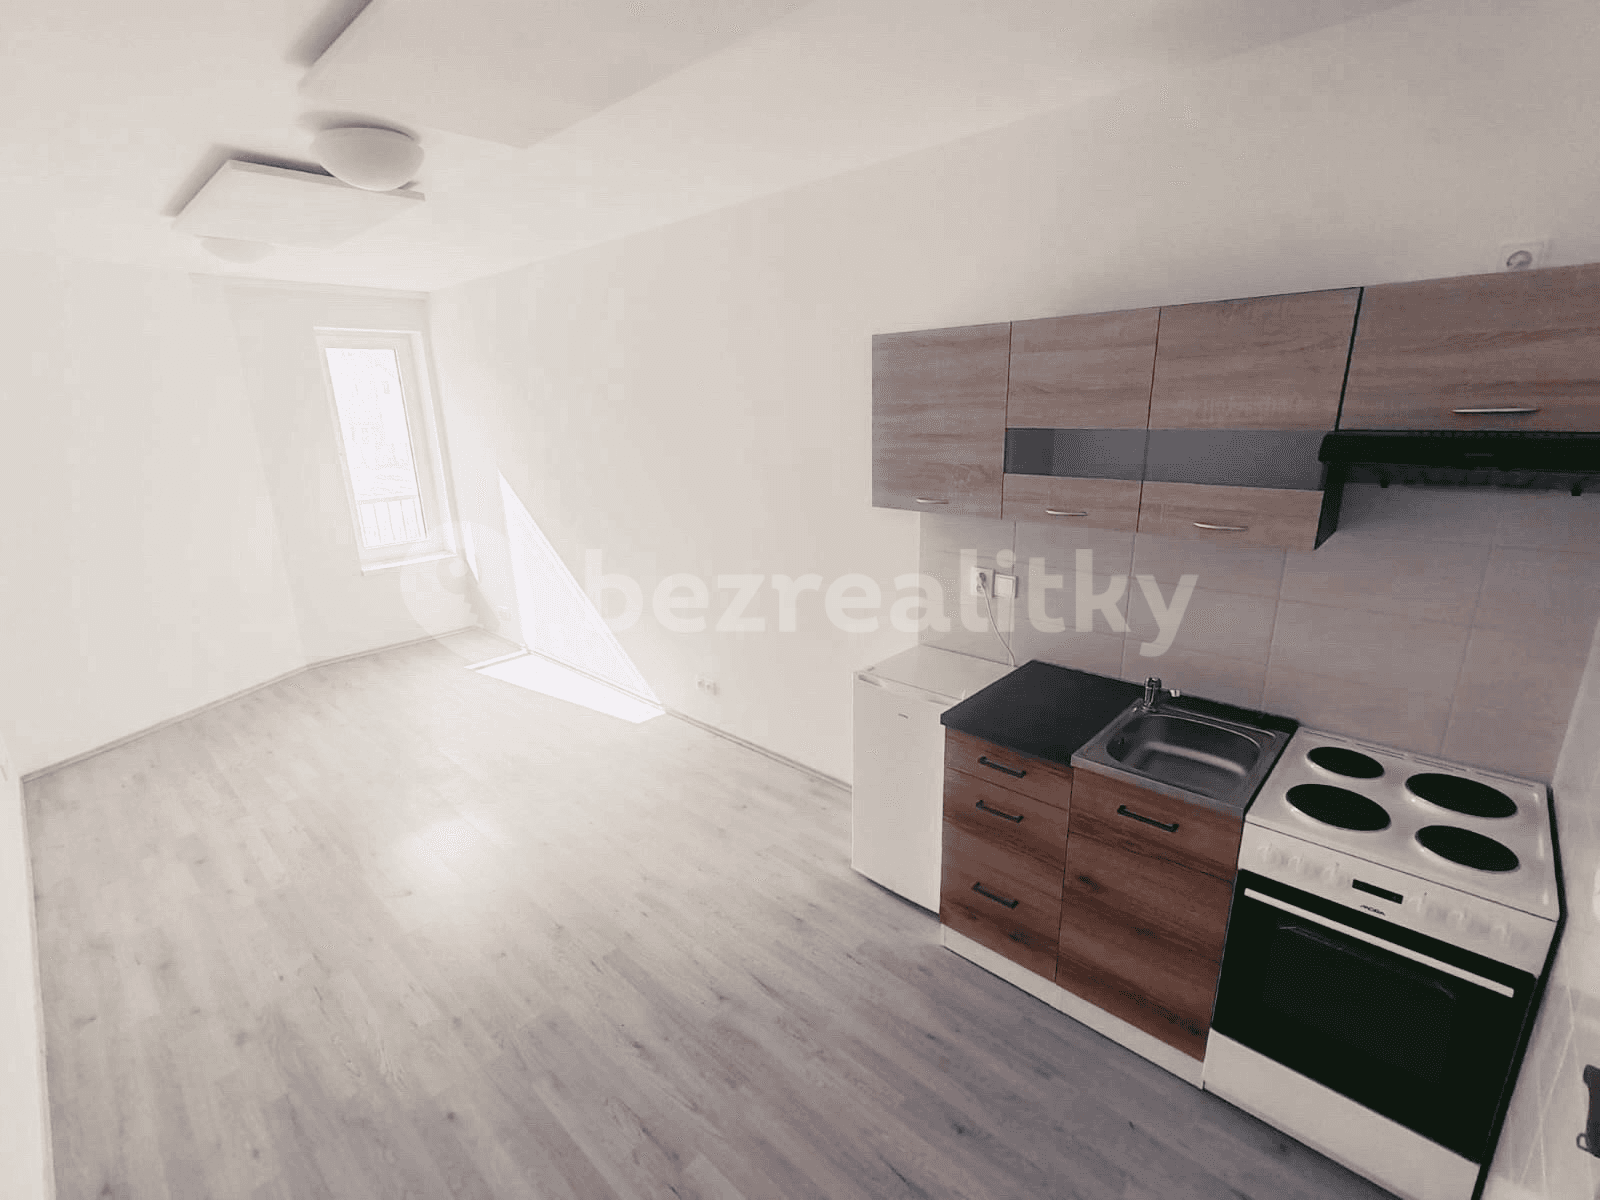 Predaj bytu 1-izbový 22 m², Škvorec, Středočeský kraj